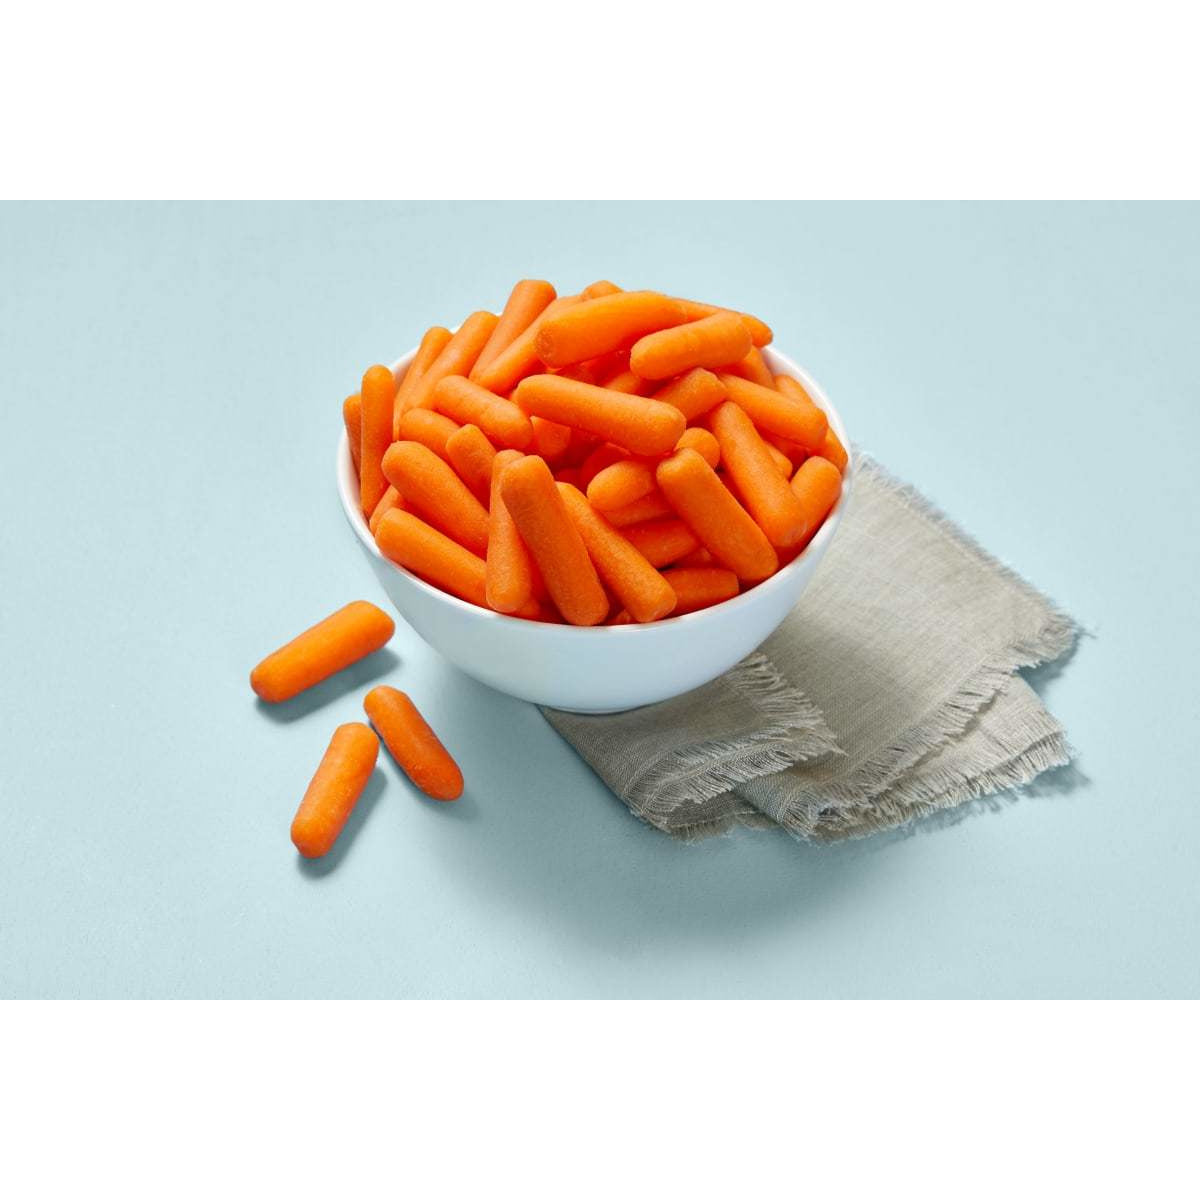 Oasis Fresh Baby Carrots, 2lbs